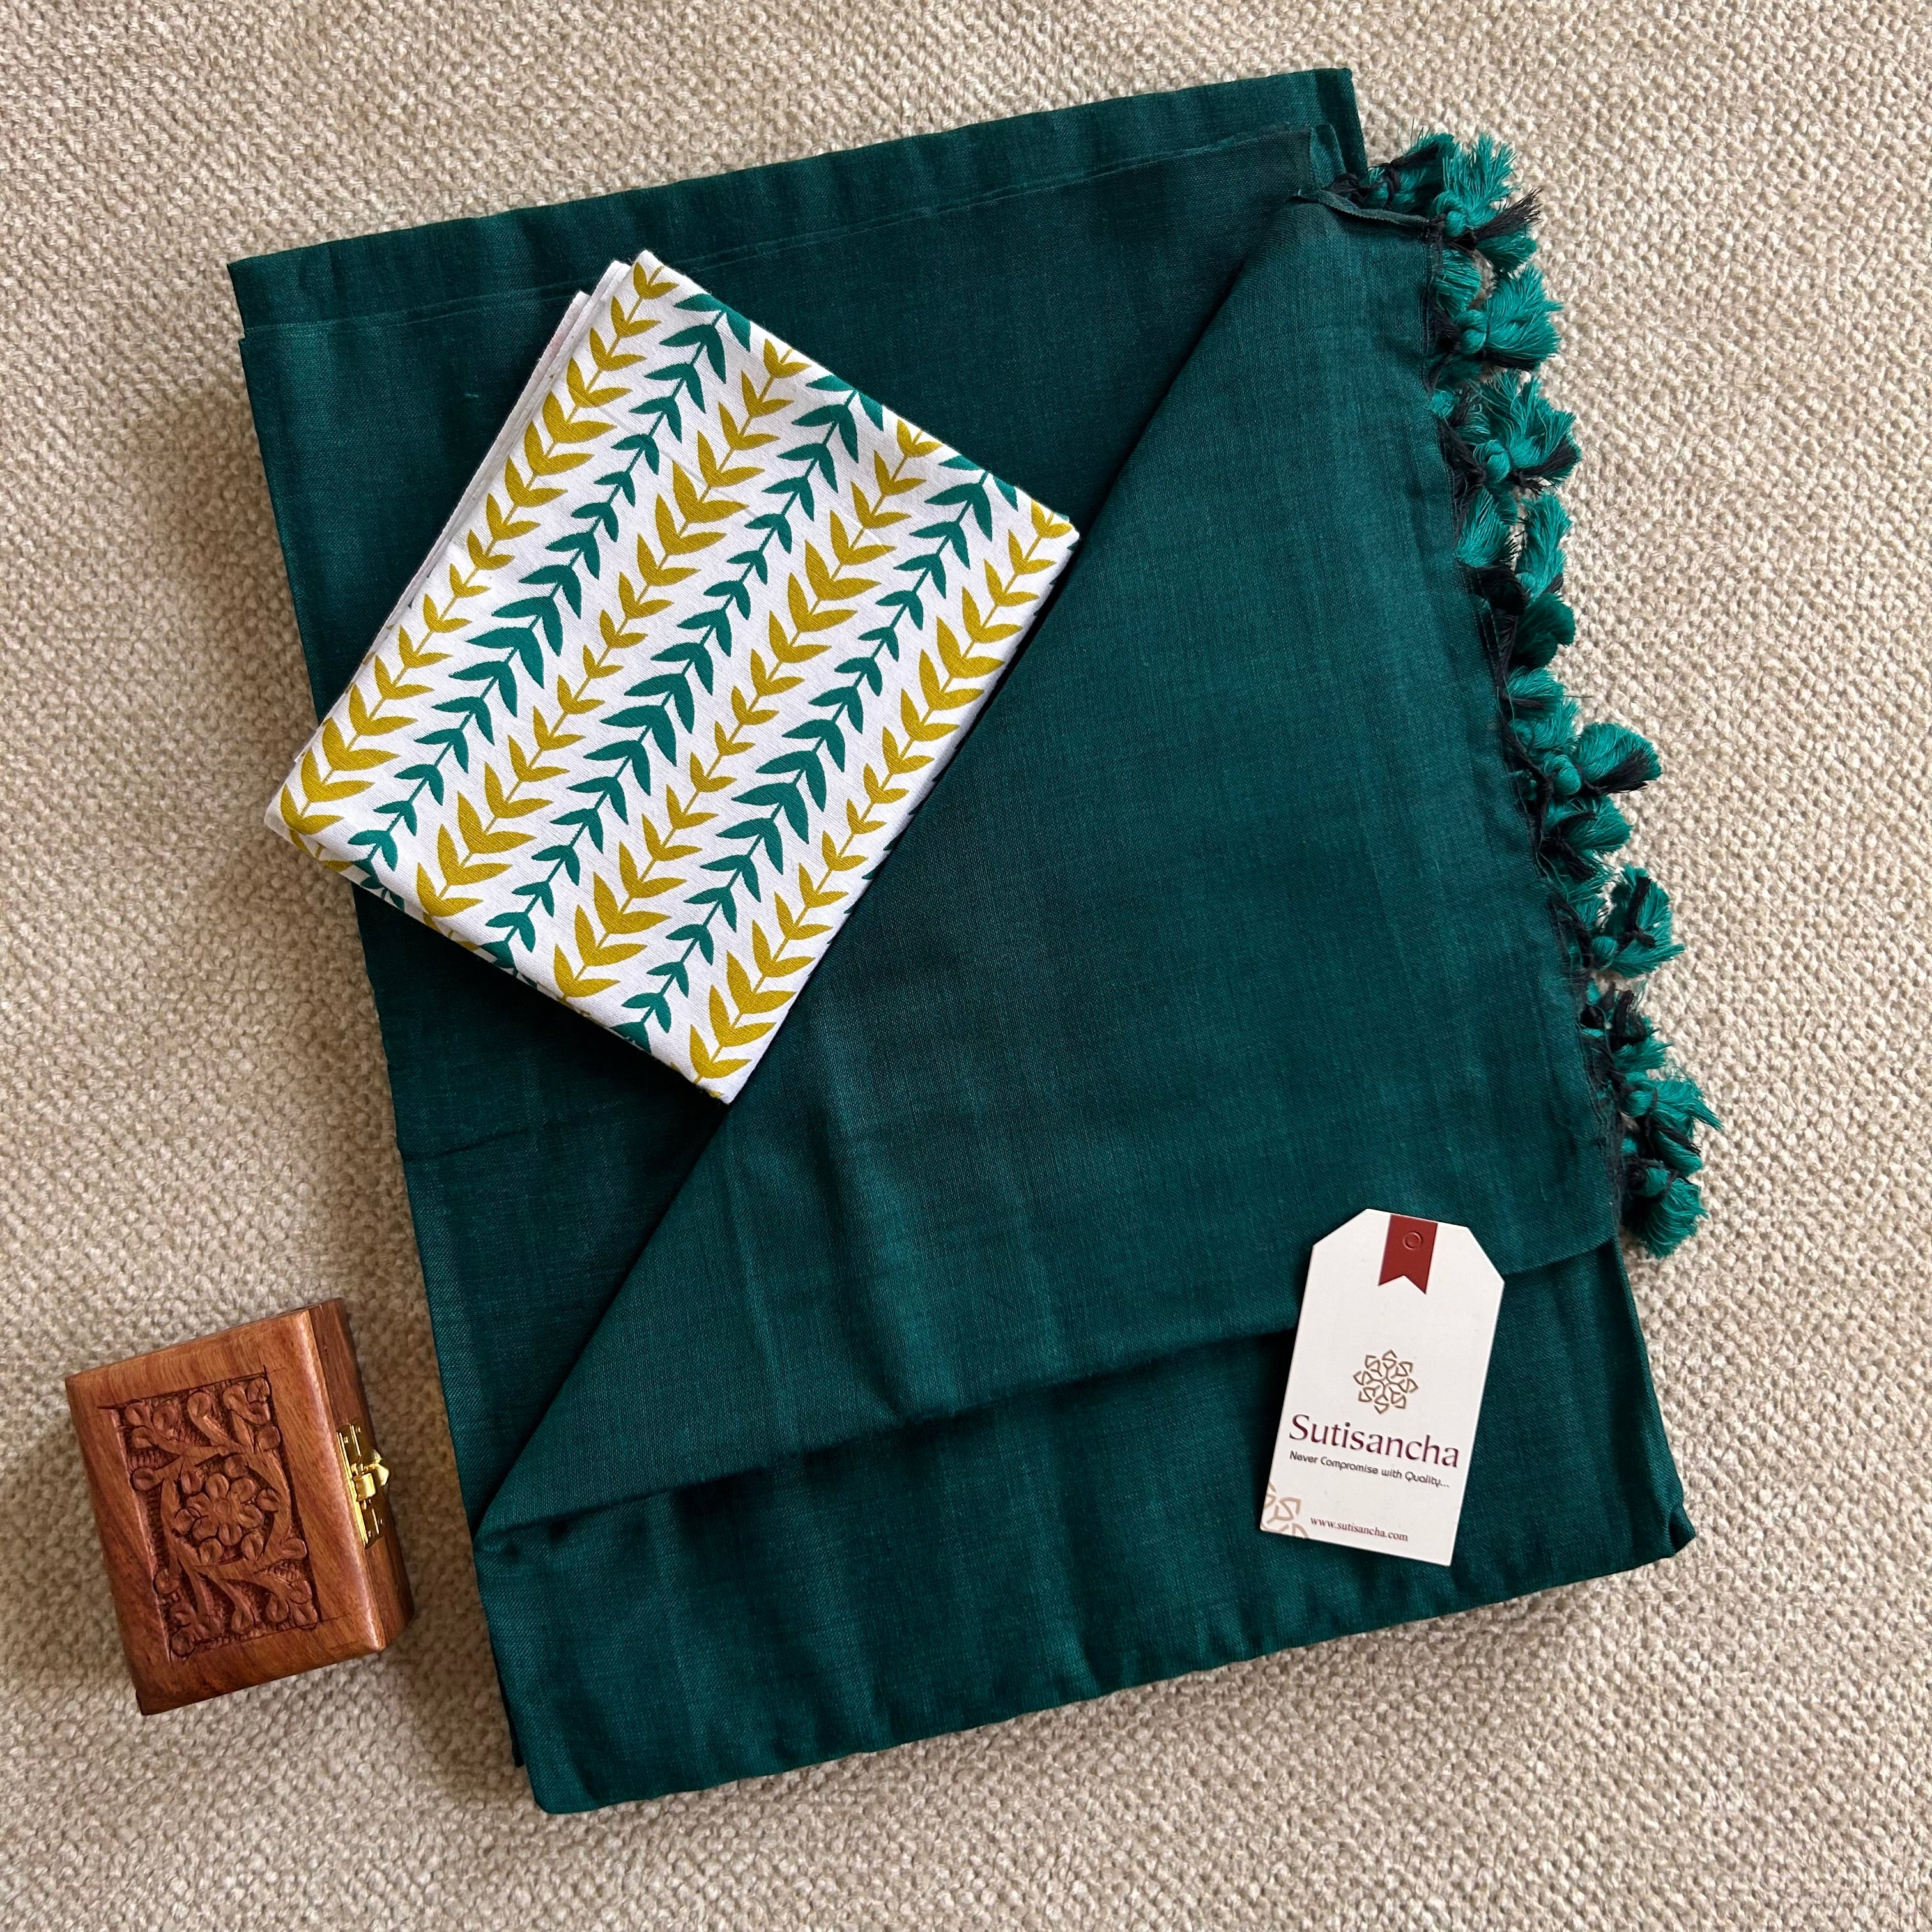 Sutisancha Rama Green Handloom Cotton Saree With Blouse